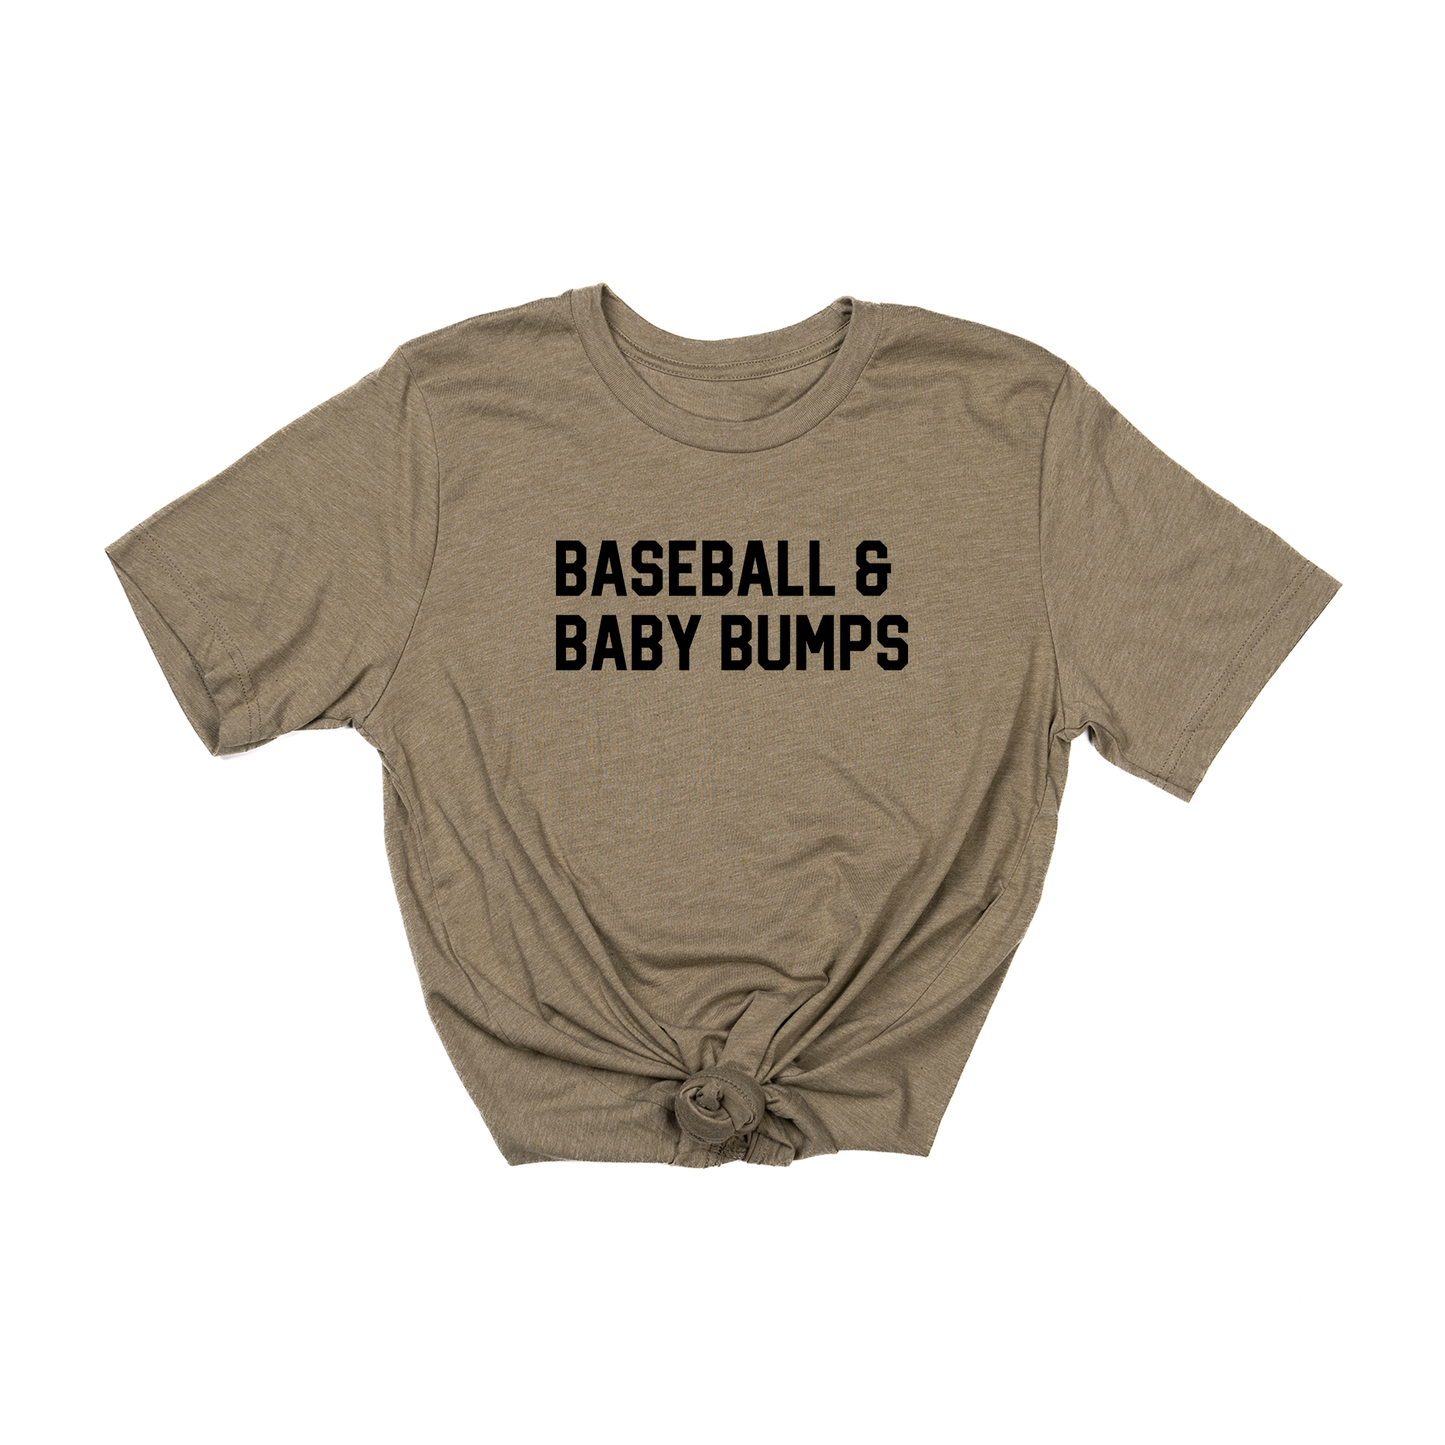 Baseball & Baby Bumps (Black) - Tee (Olive)